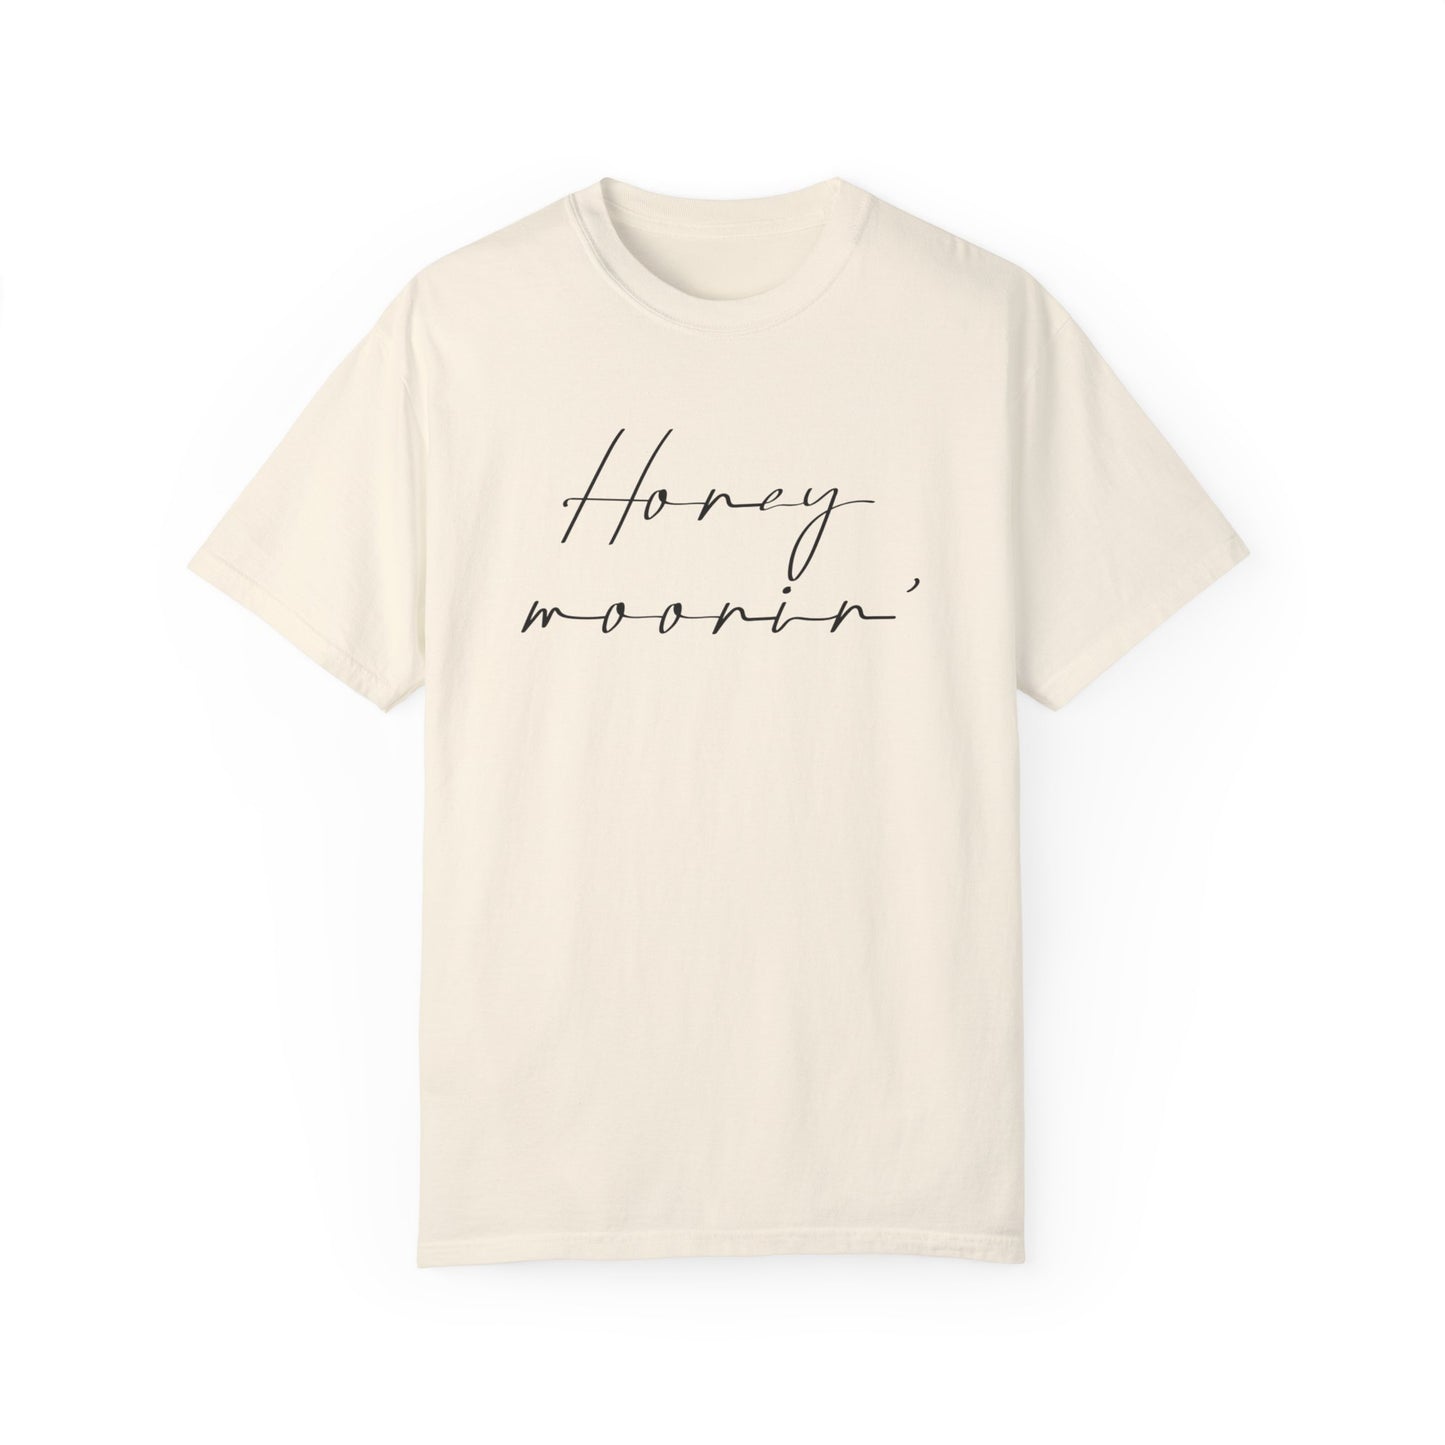 Casual honeymoon shirt with 'Honeymooning' script